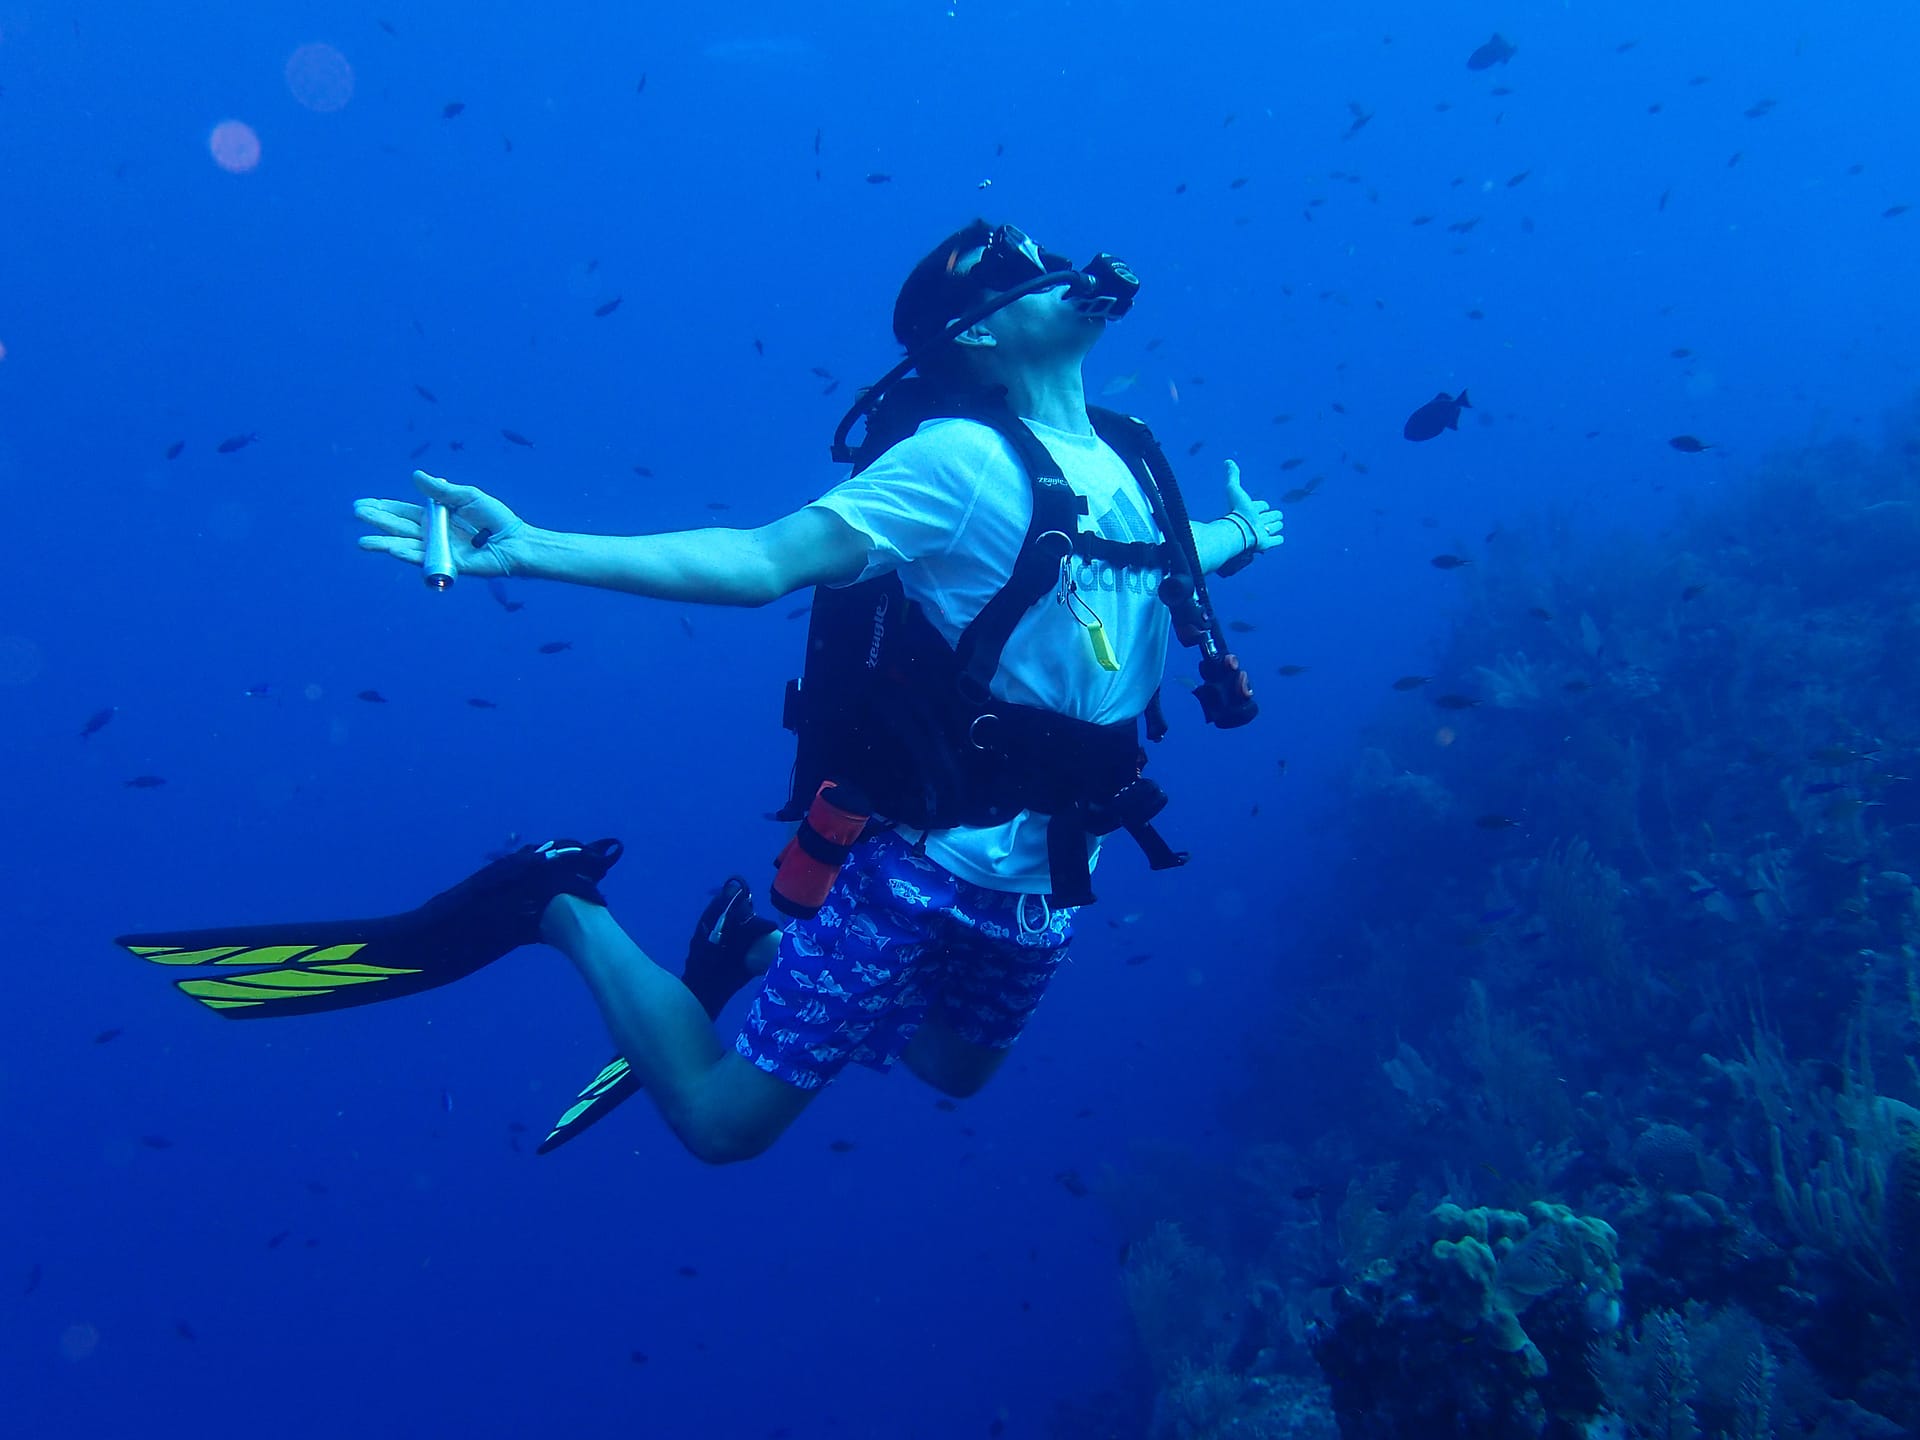 Dr. Izadi Scuba Diving with DiVentures, Omaha NE